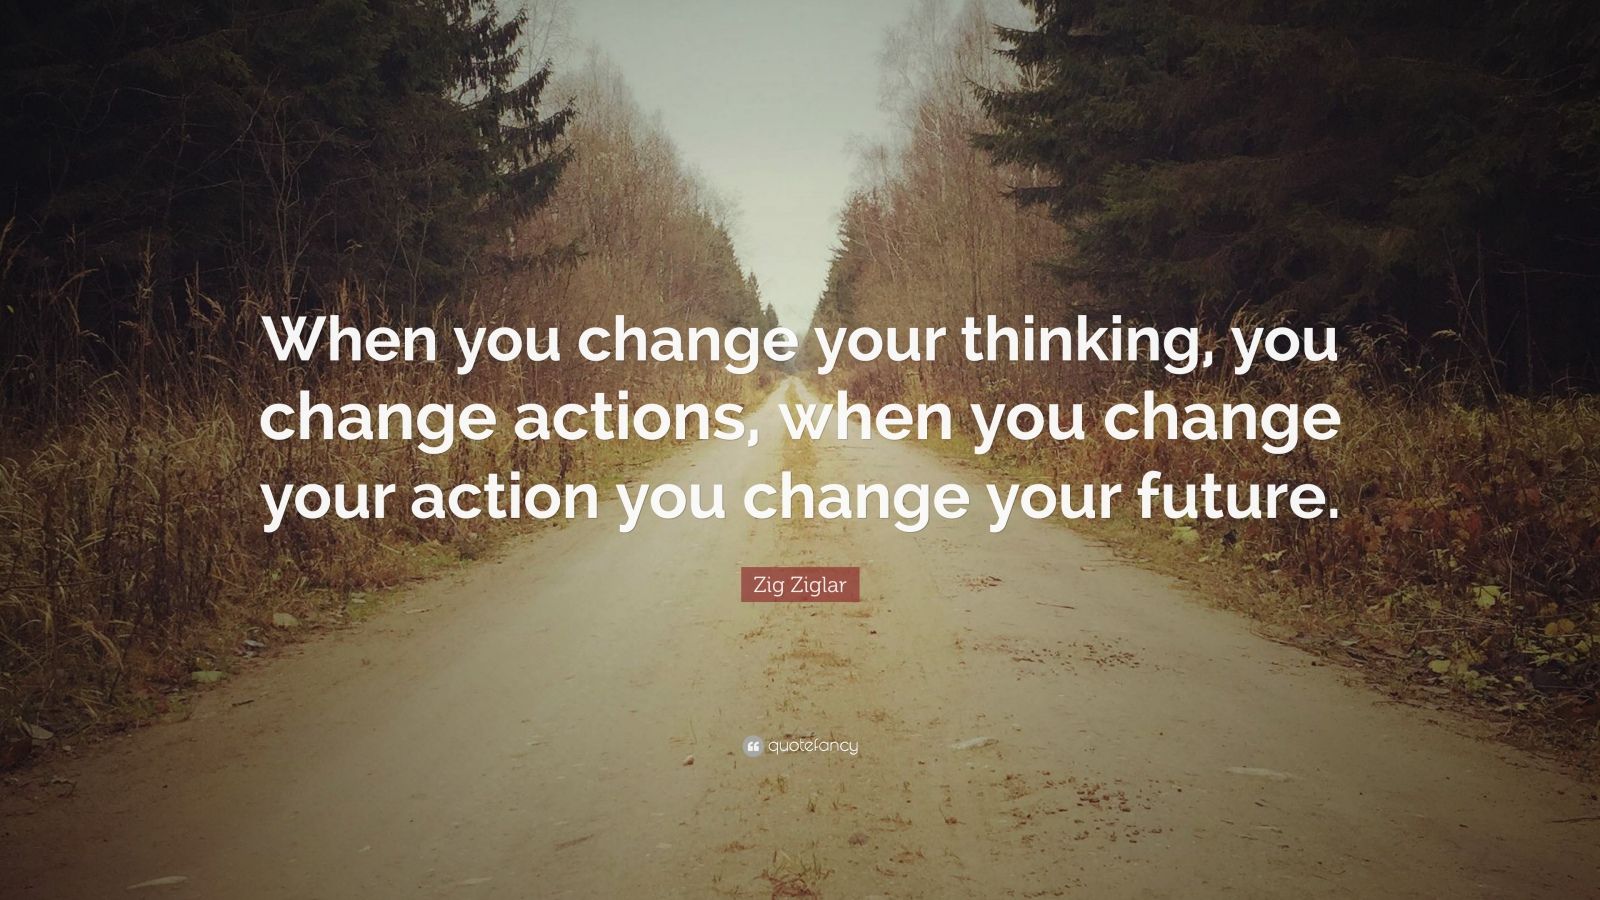 Zig Ziglar Quote: “When you change your thinking, you change actions